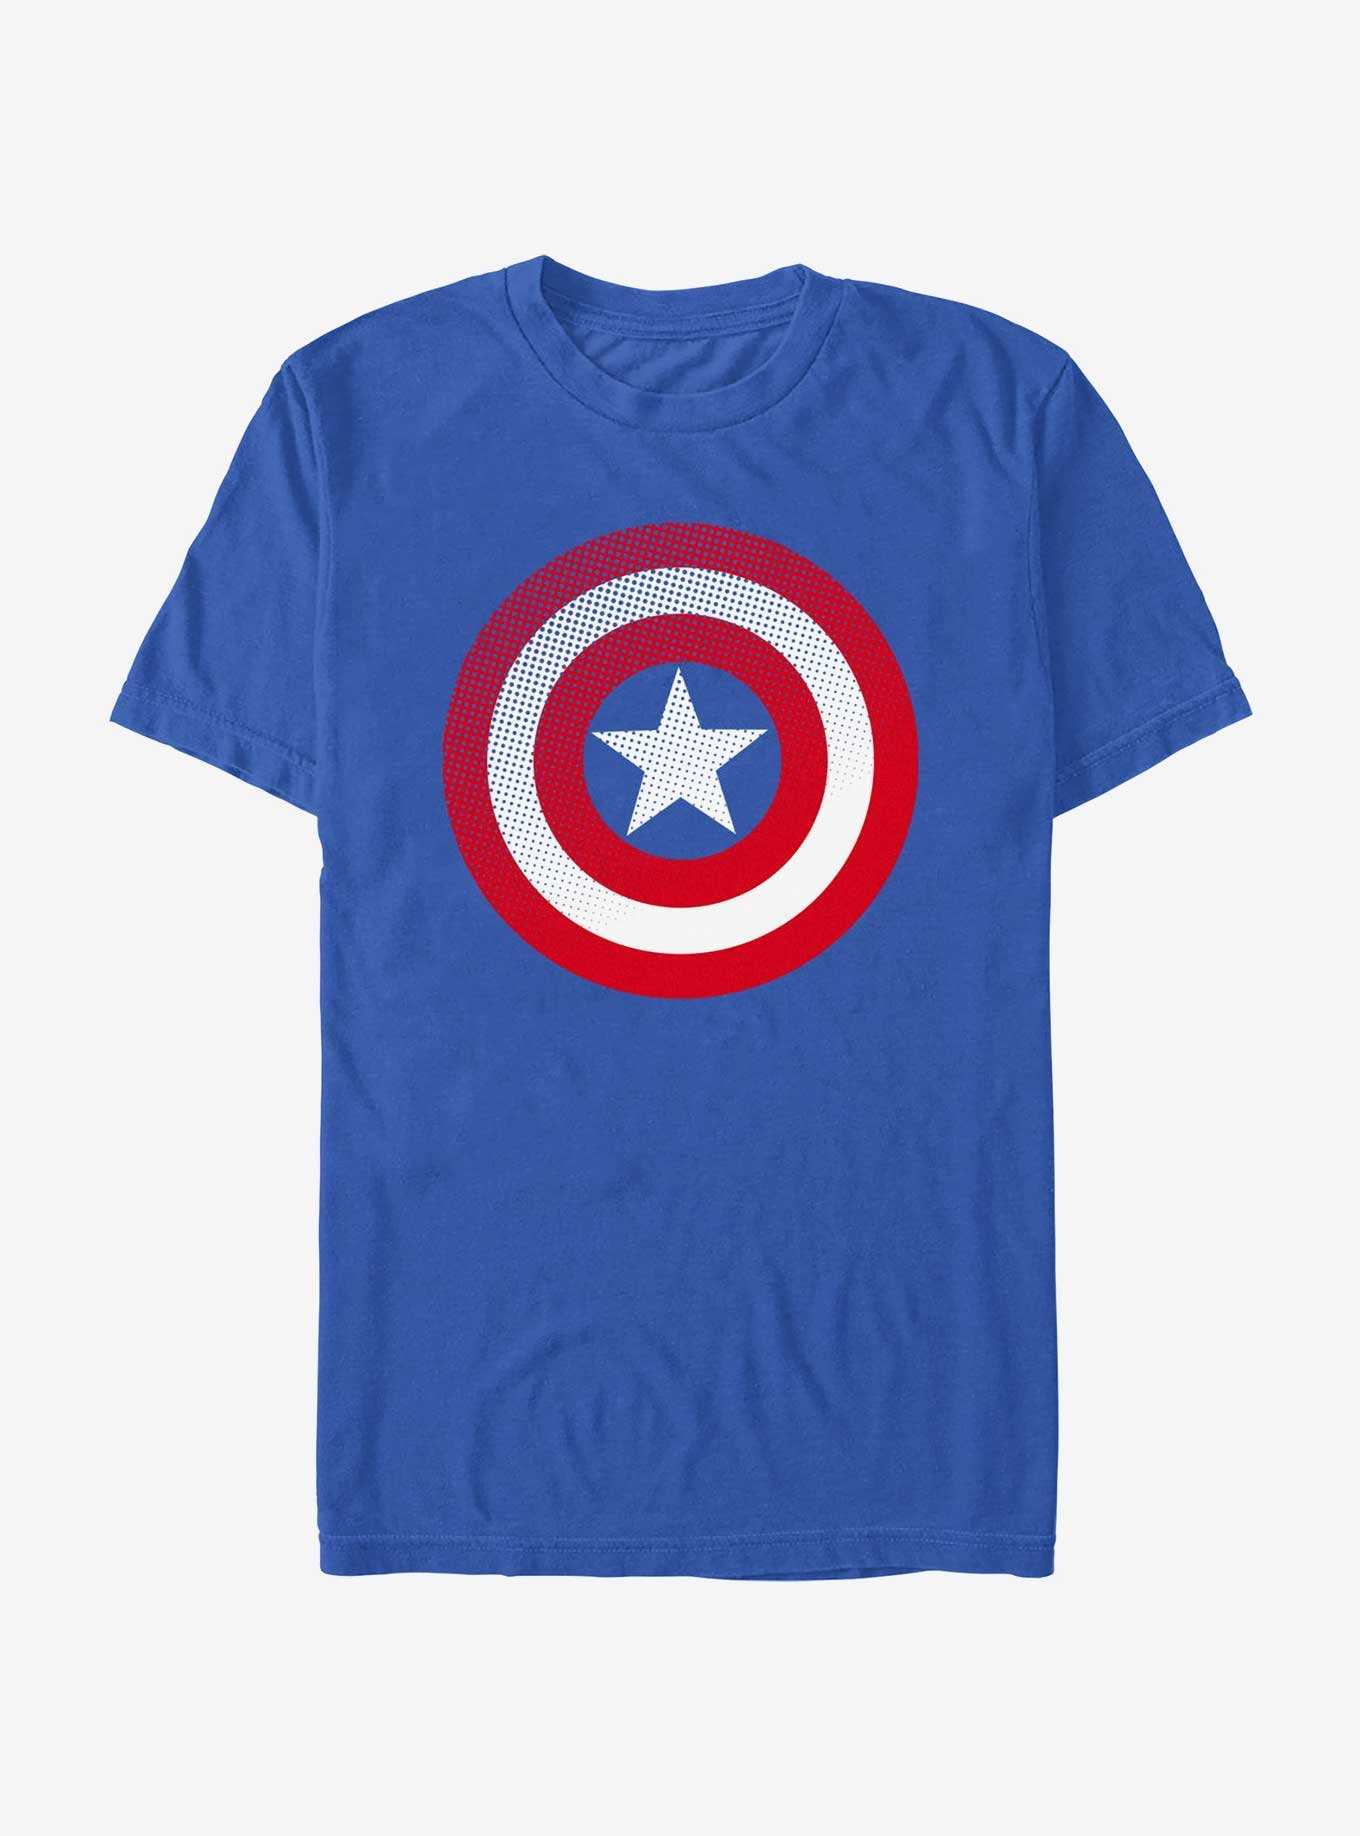 Marvel Captain America Halftone Shield T-Shirt, , hi-res